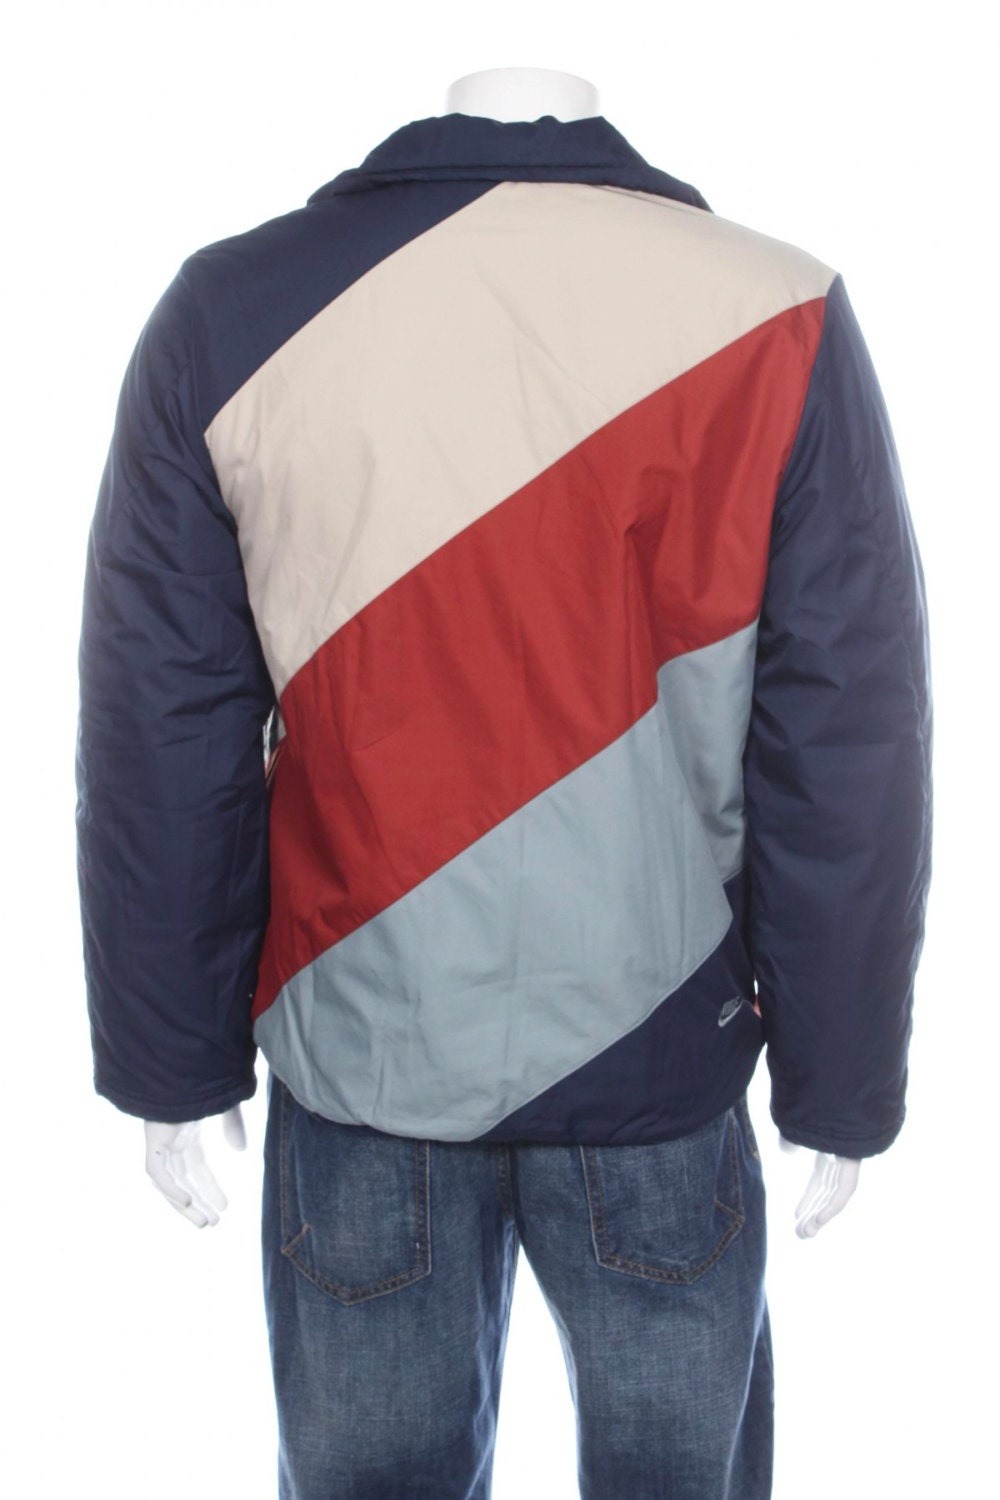 Nike Jacket Quilted Multicolor Jacket Retro Streetwear Coat Blue/beige ...